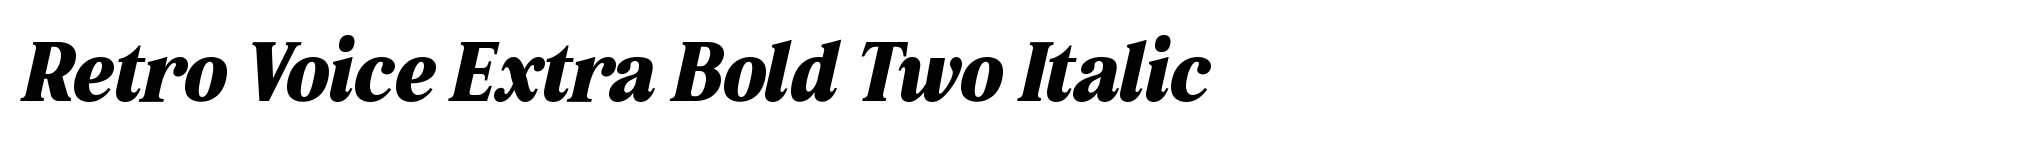 Retro Voice Extra Bold Two Italic image